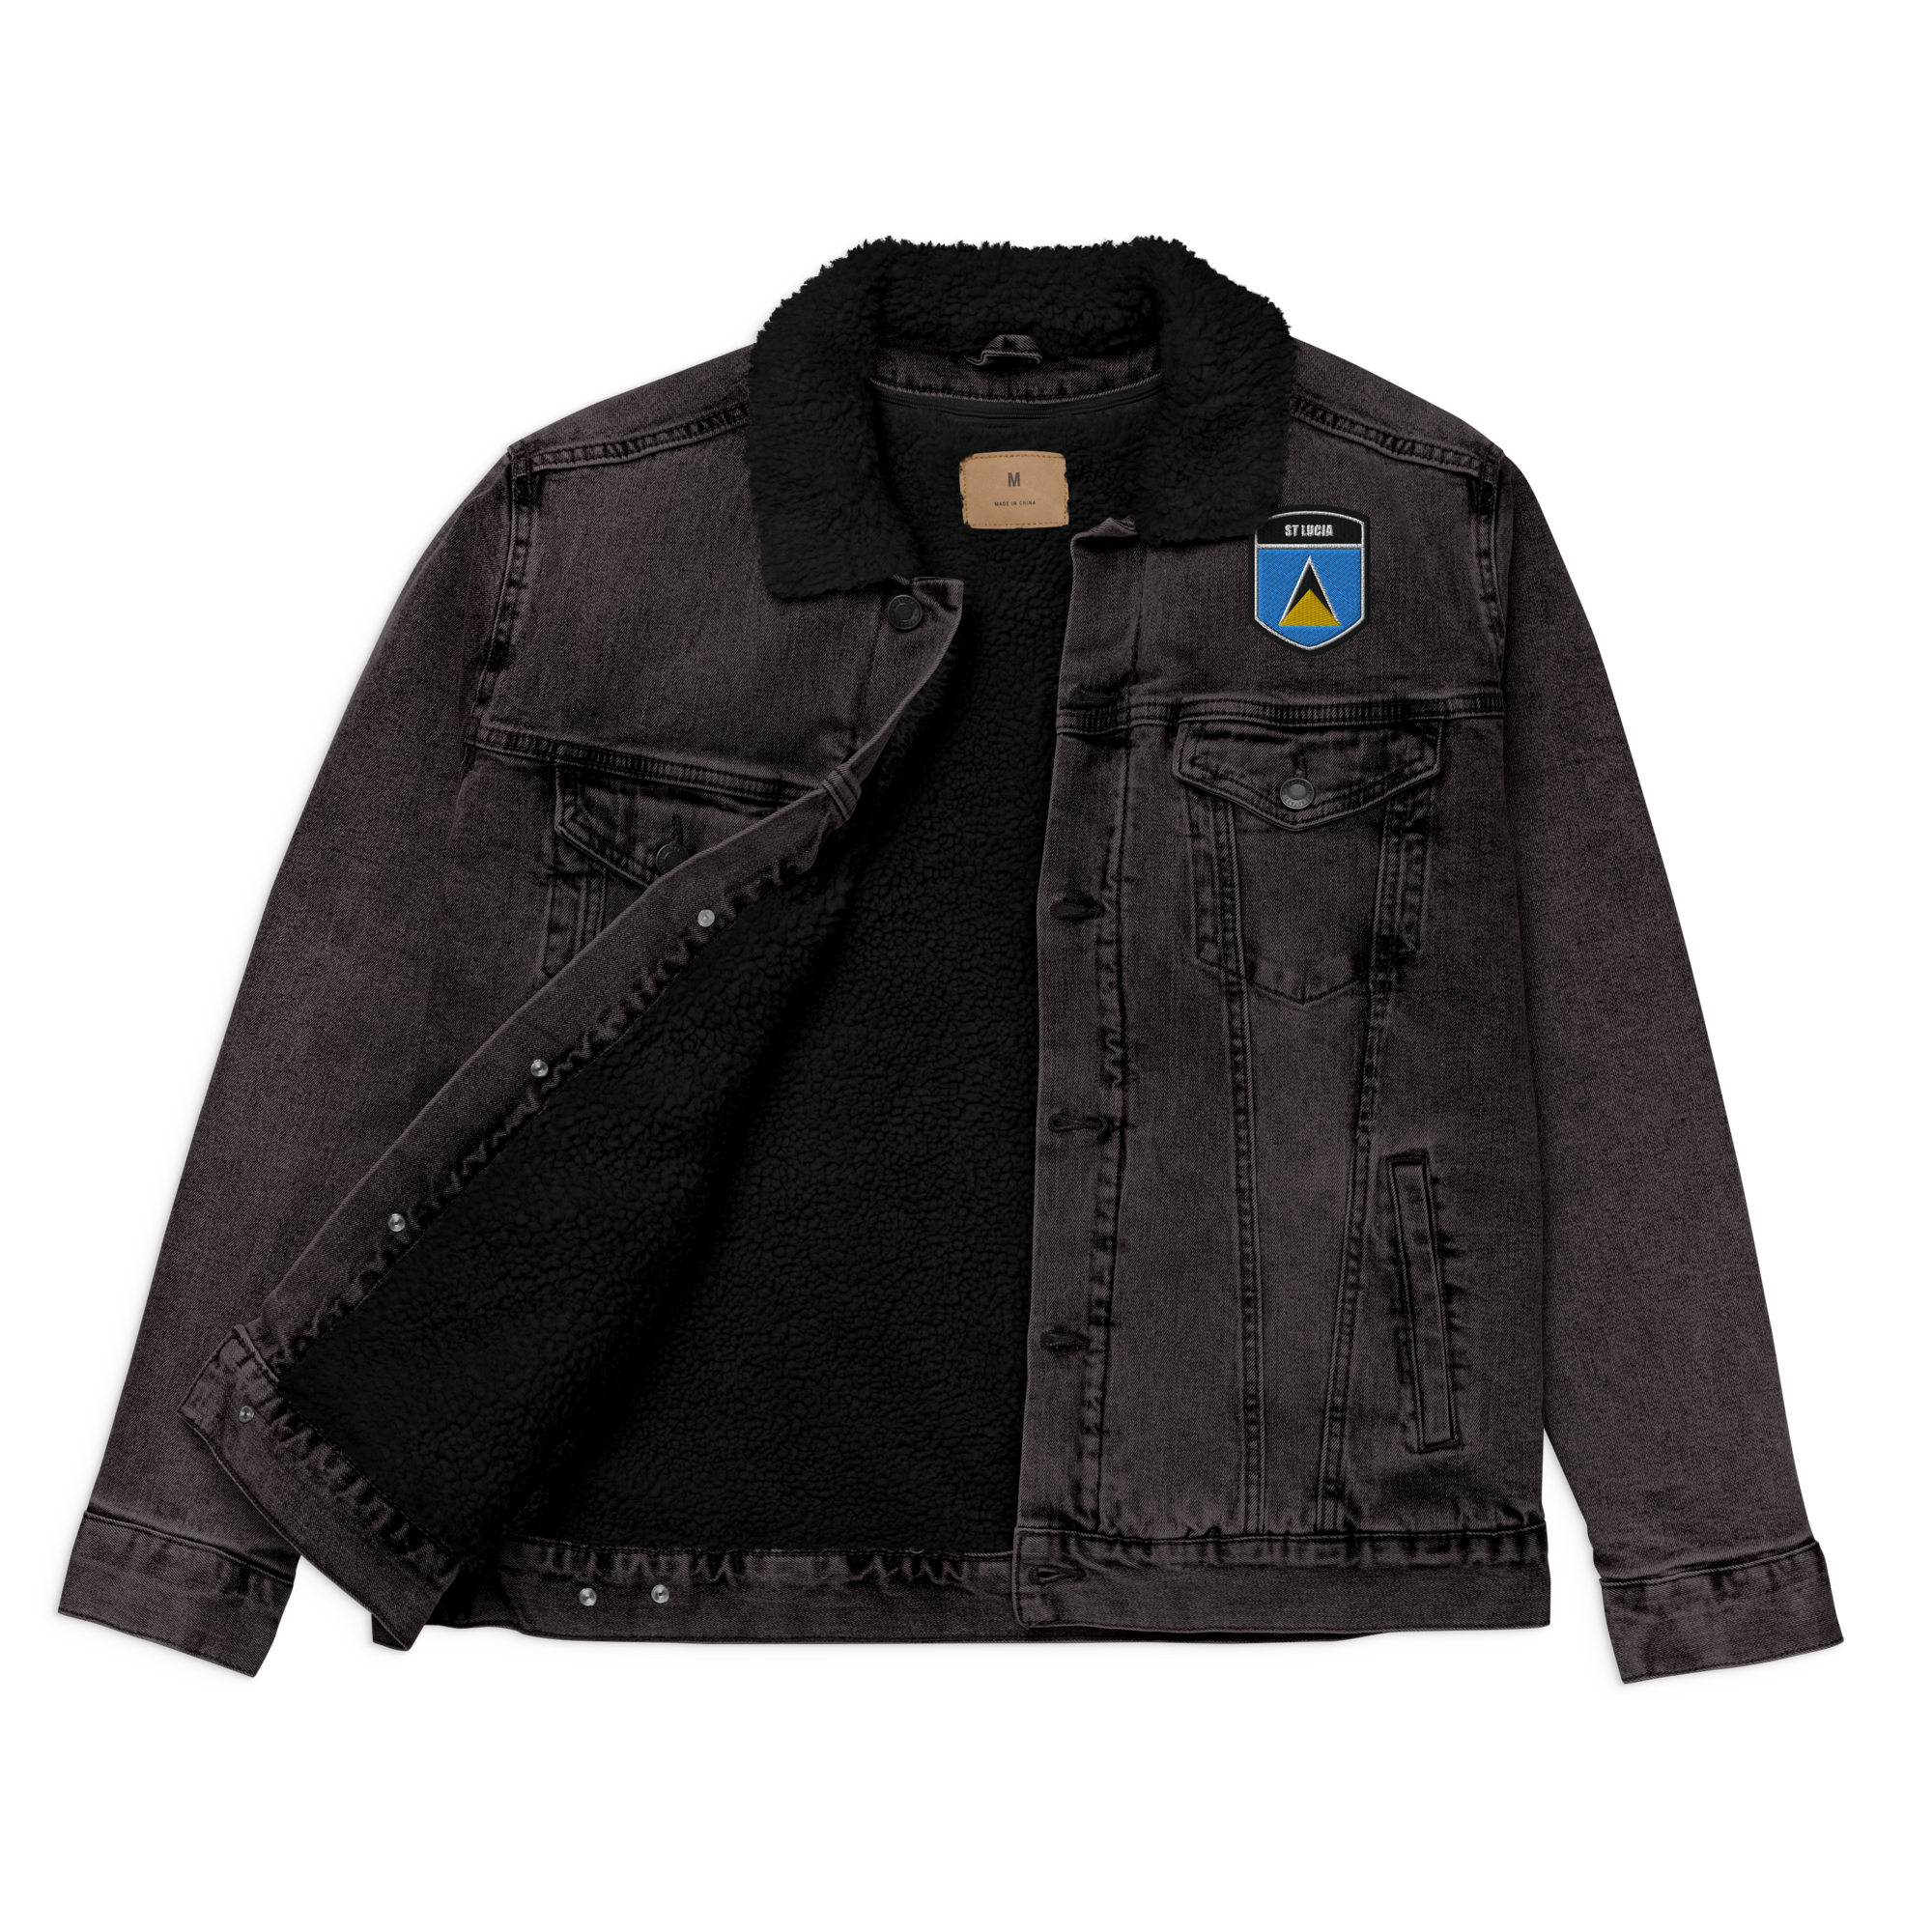 St John Sport by Marie Gray Black Cotton Blend Denim Jacket Size Petite |  eBay